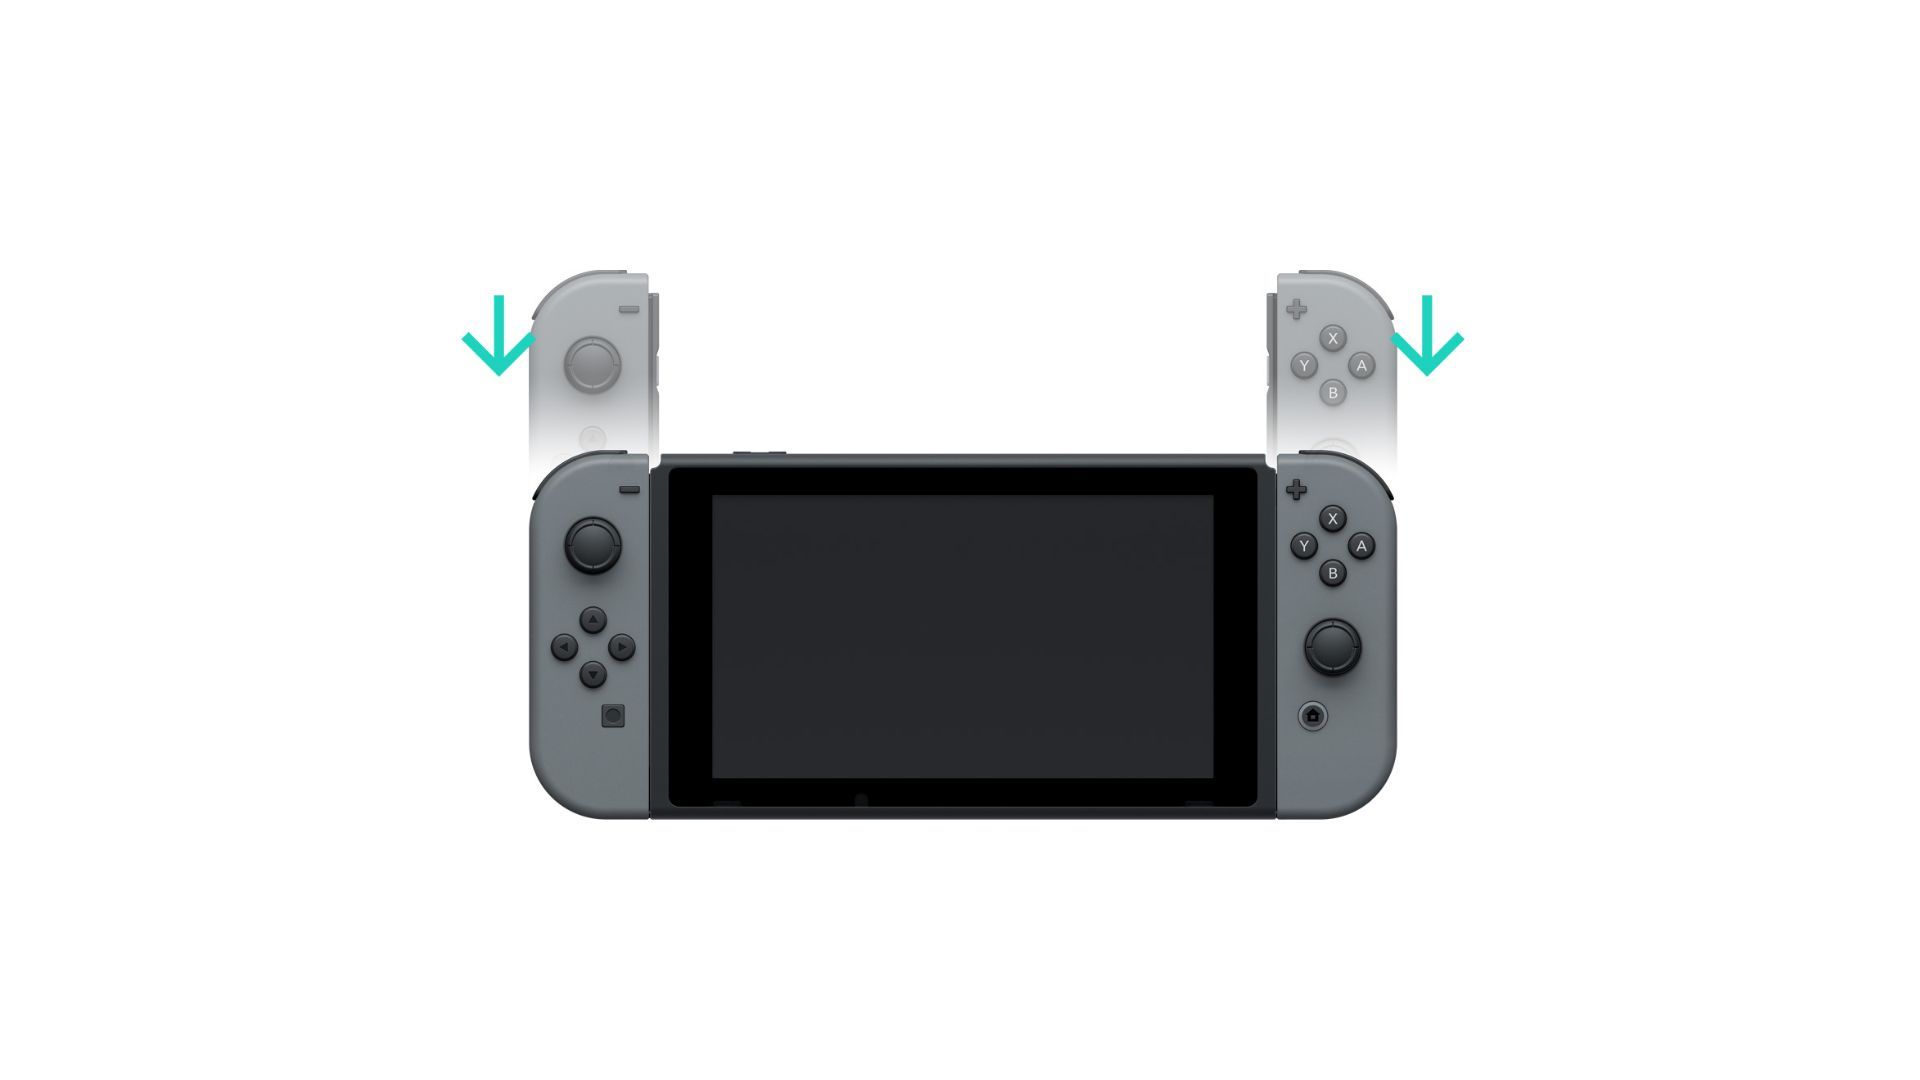 Attach the Nintendo Switch Joy-cons